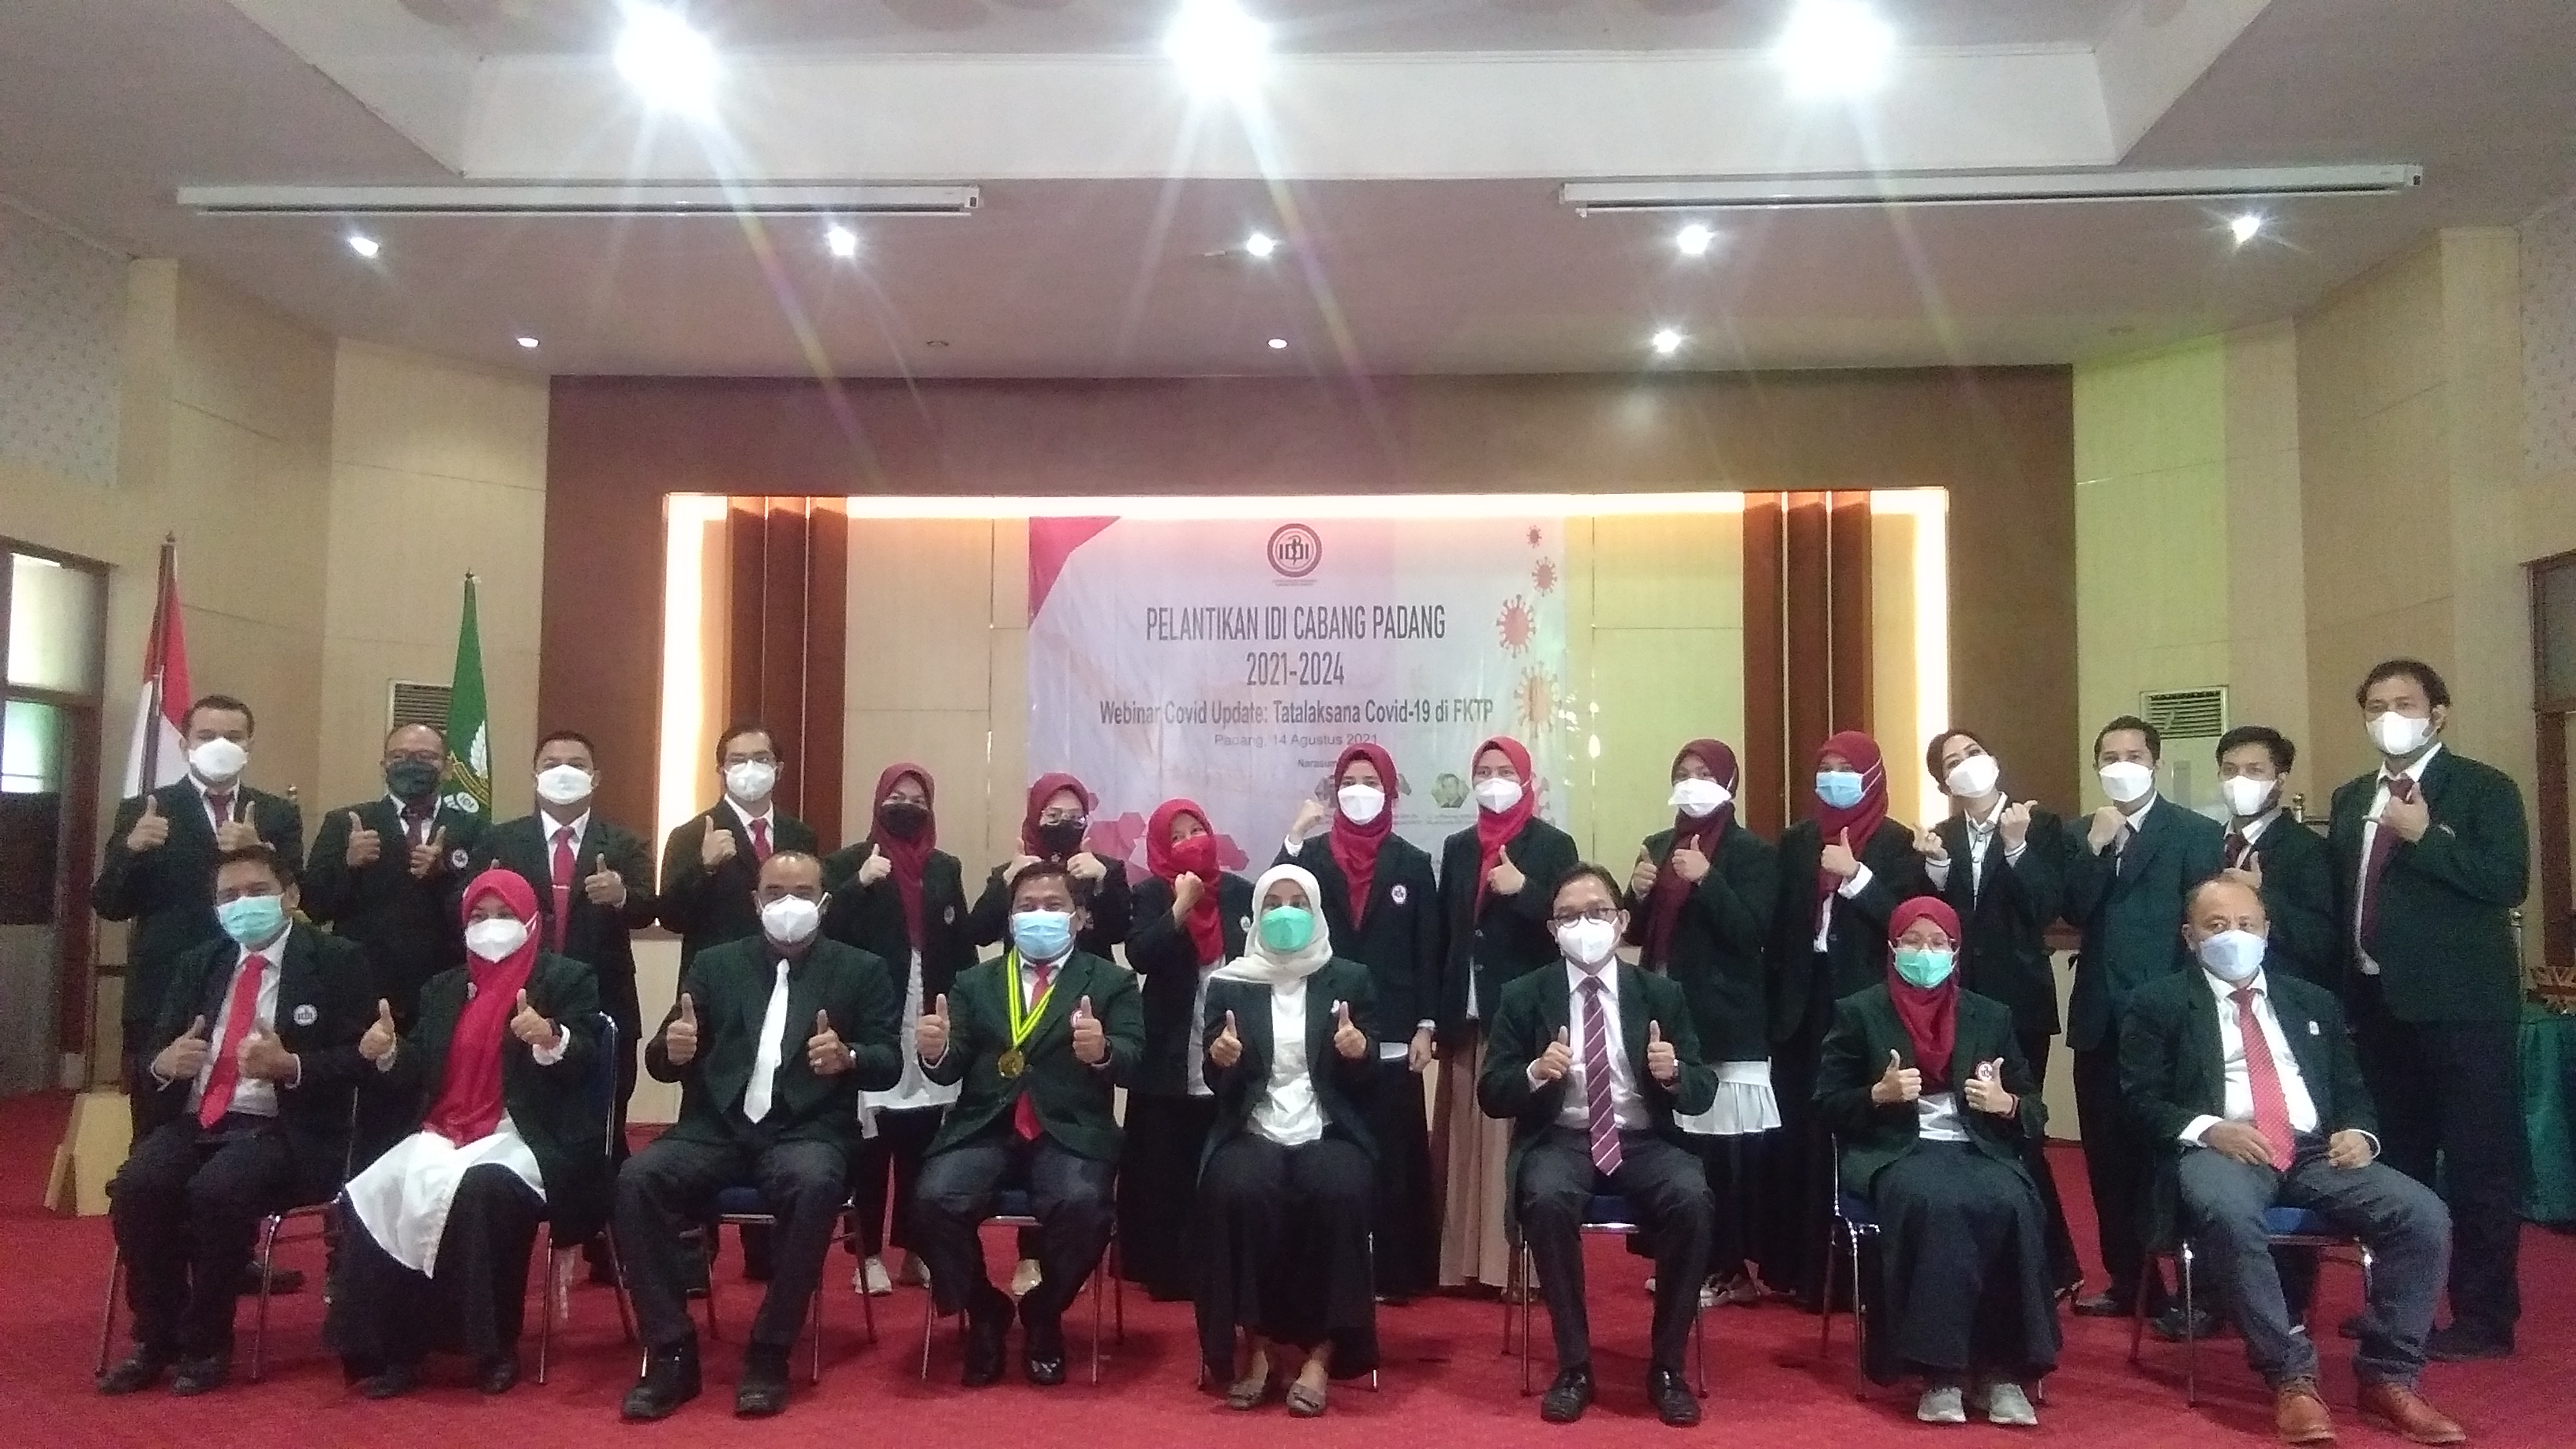 Pengurus Ikatan Dokter Indonesia (IDI) cabang Padang periode 2021-2024